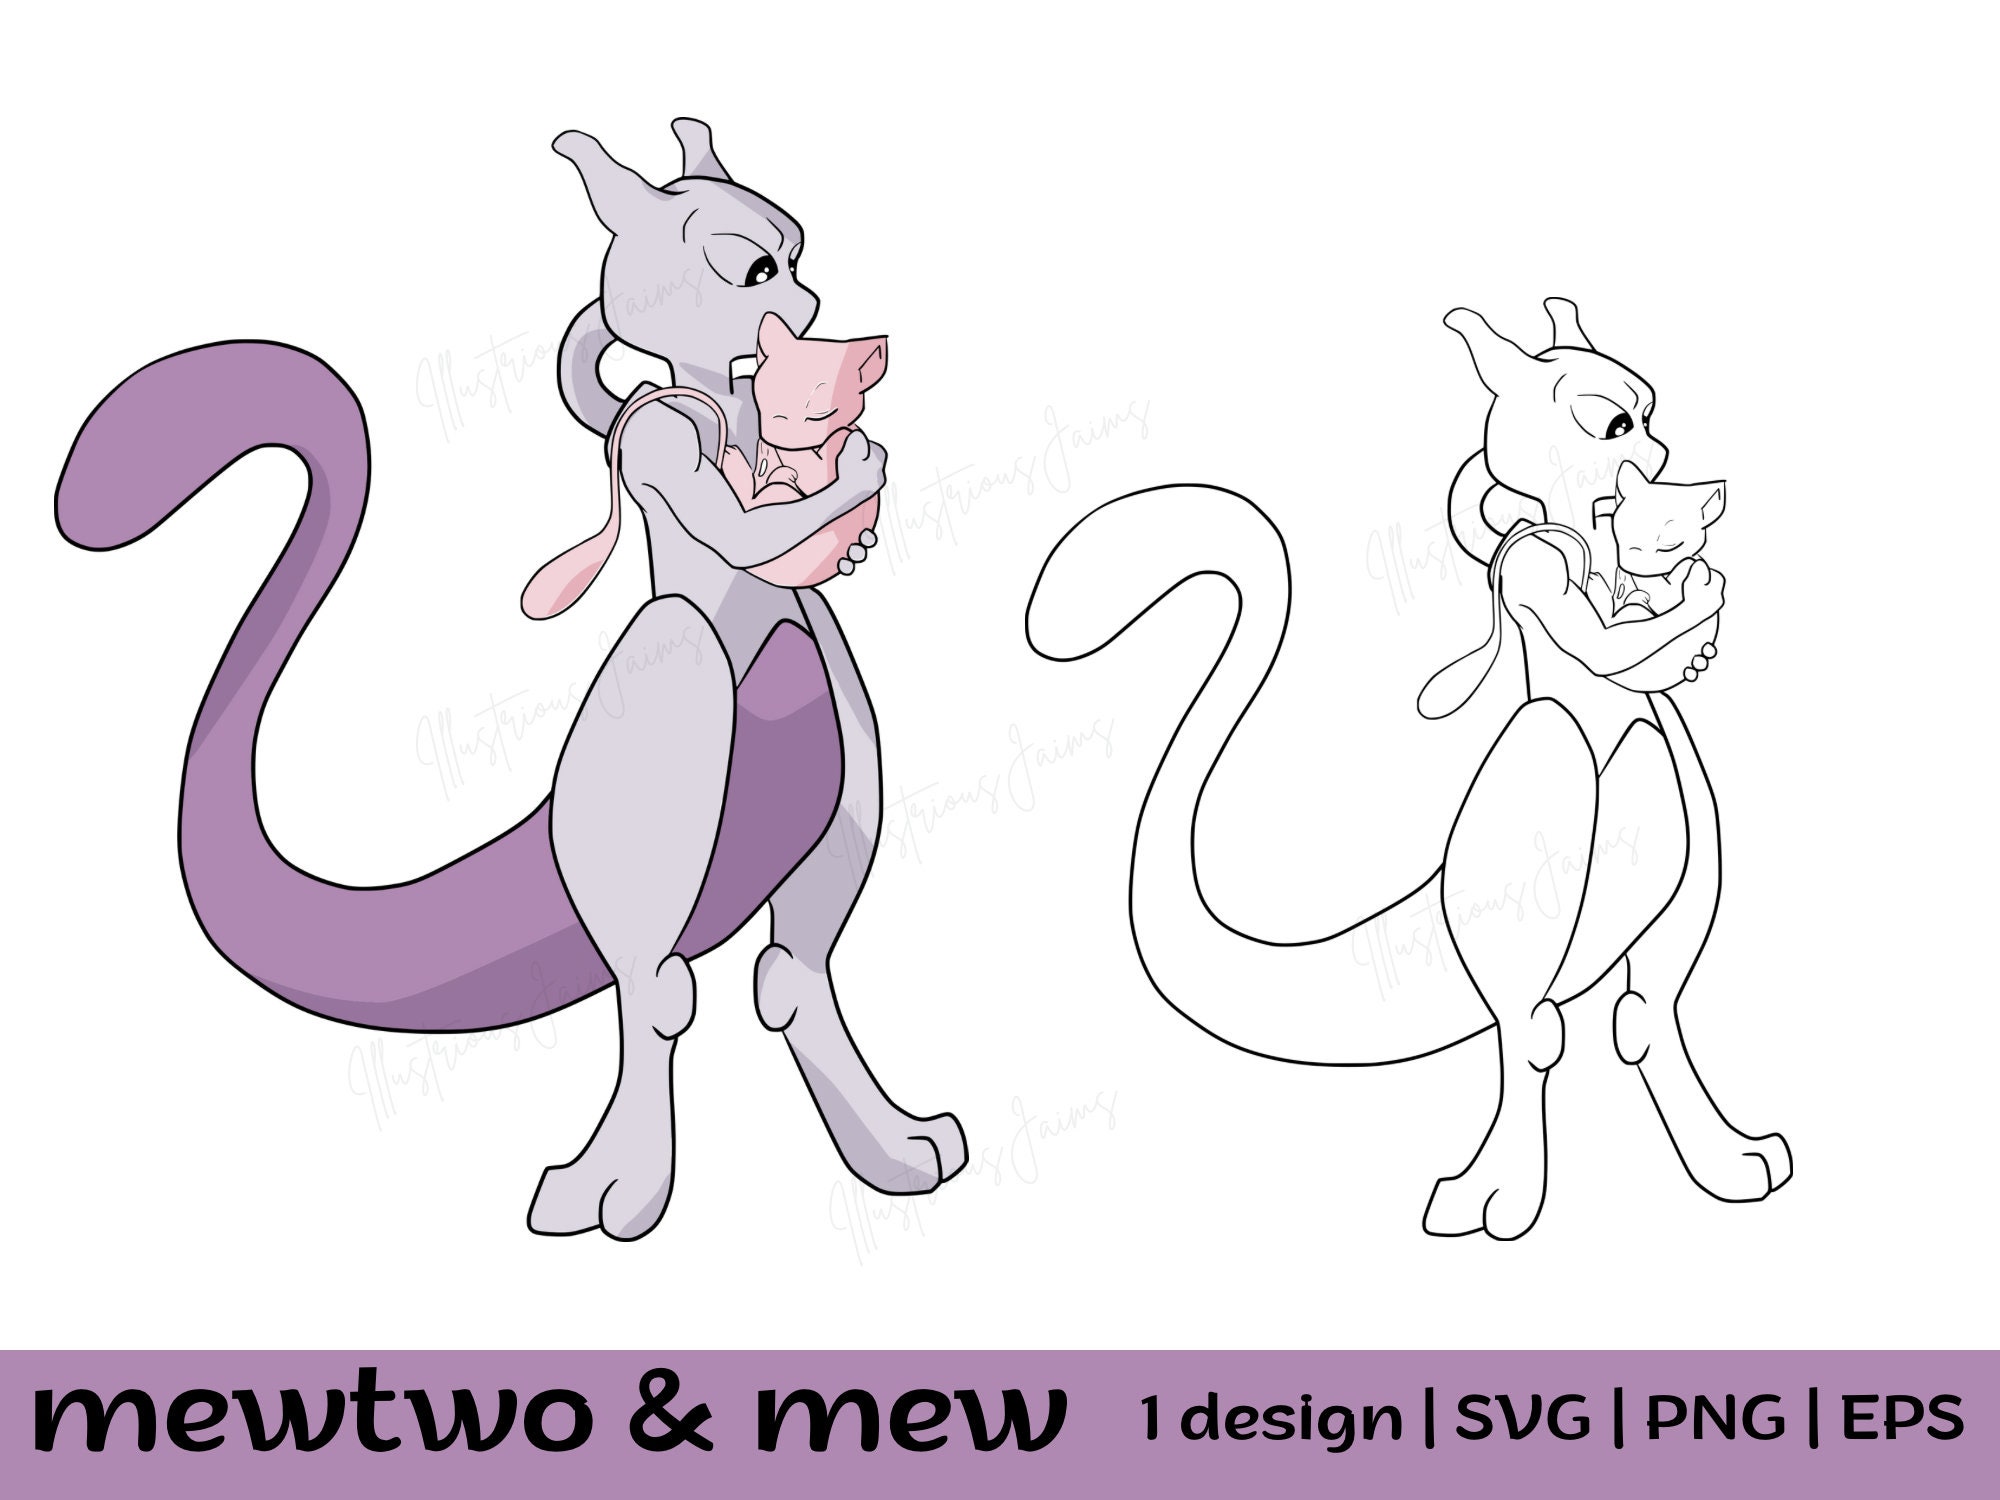 Cute Pokemon Mewtwo Cartoon Movie SVG PNG - Inspire Uplift